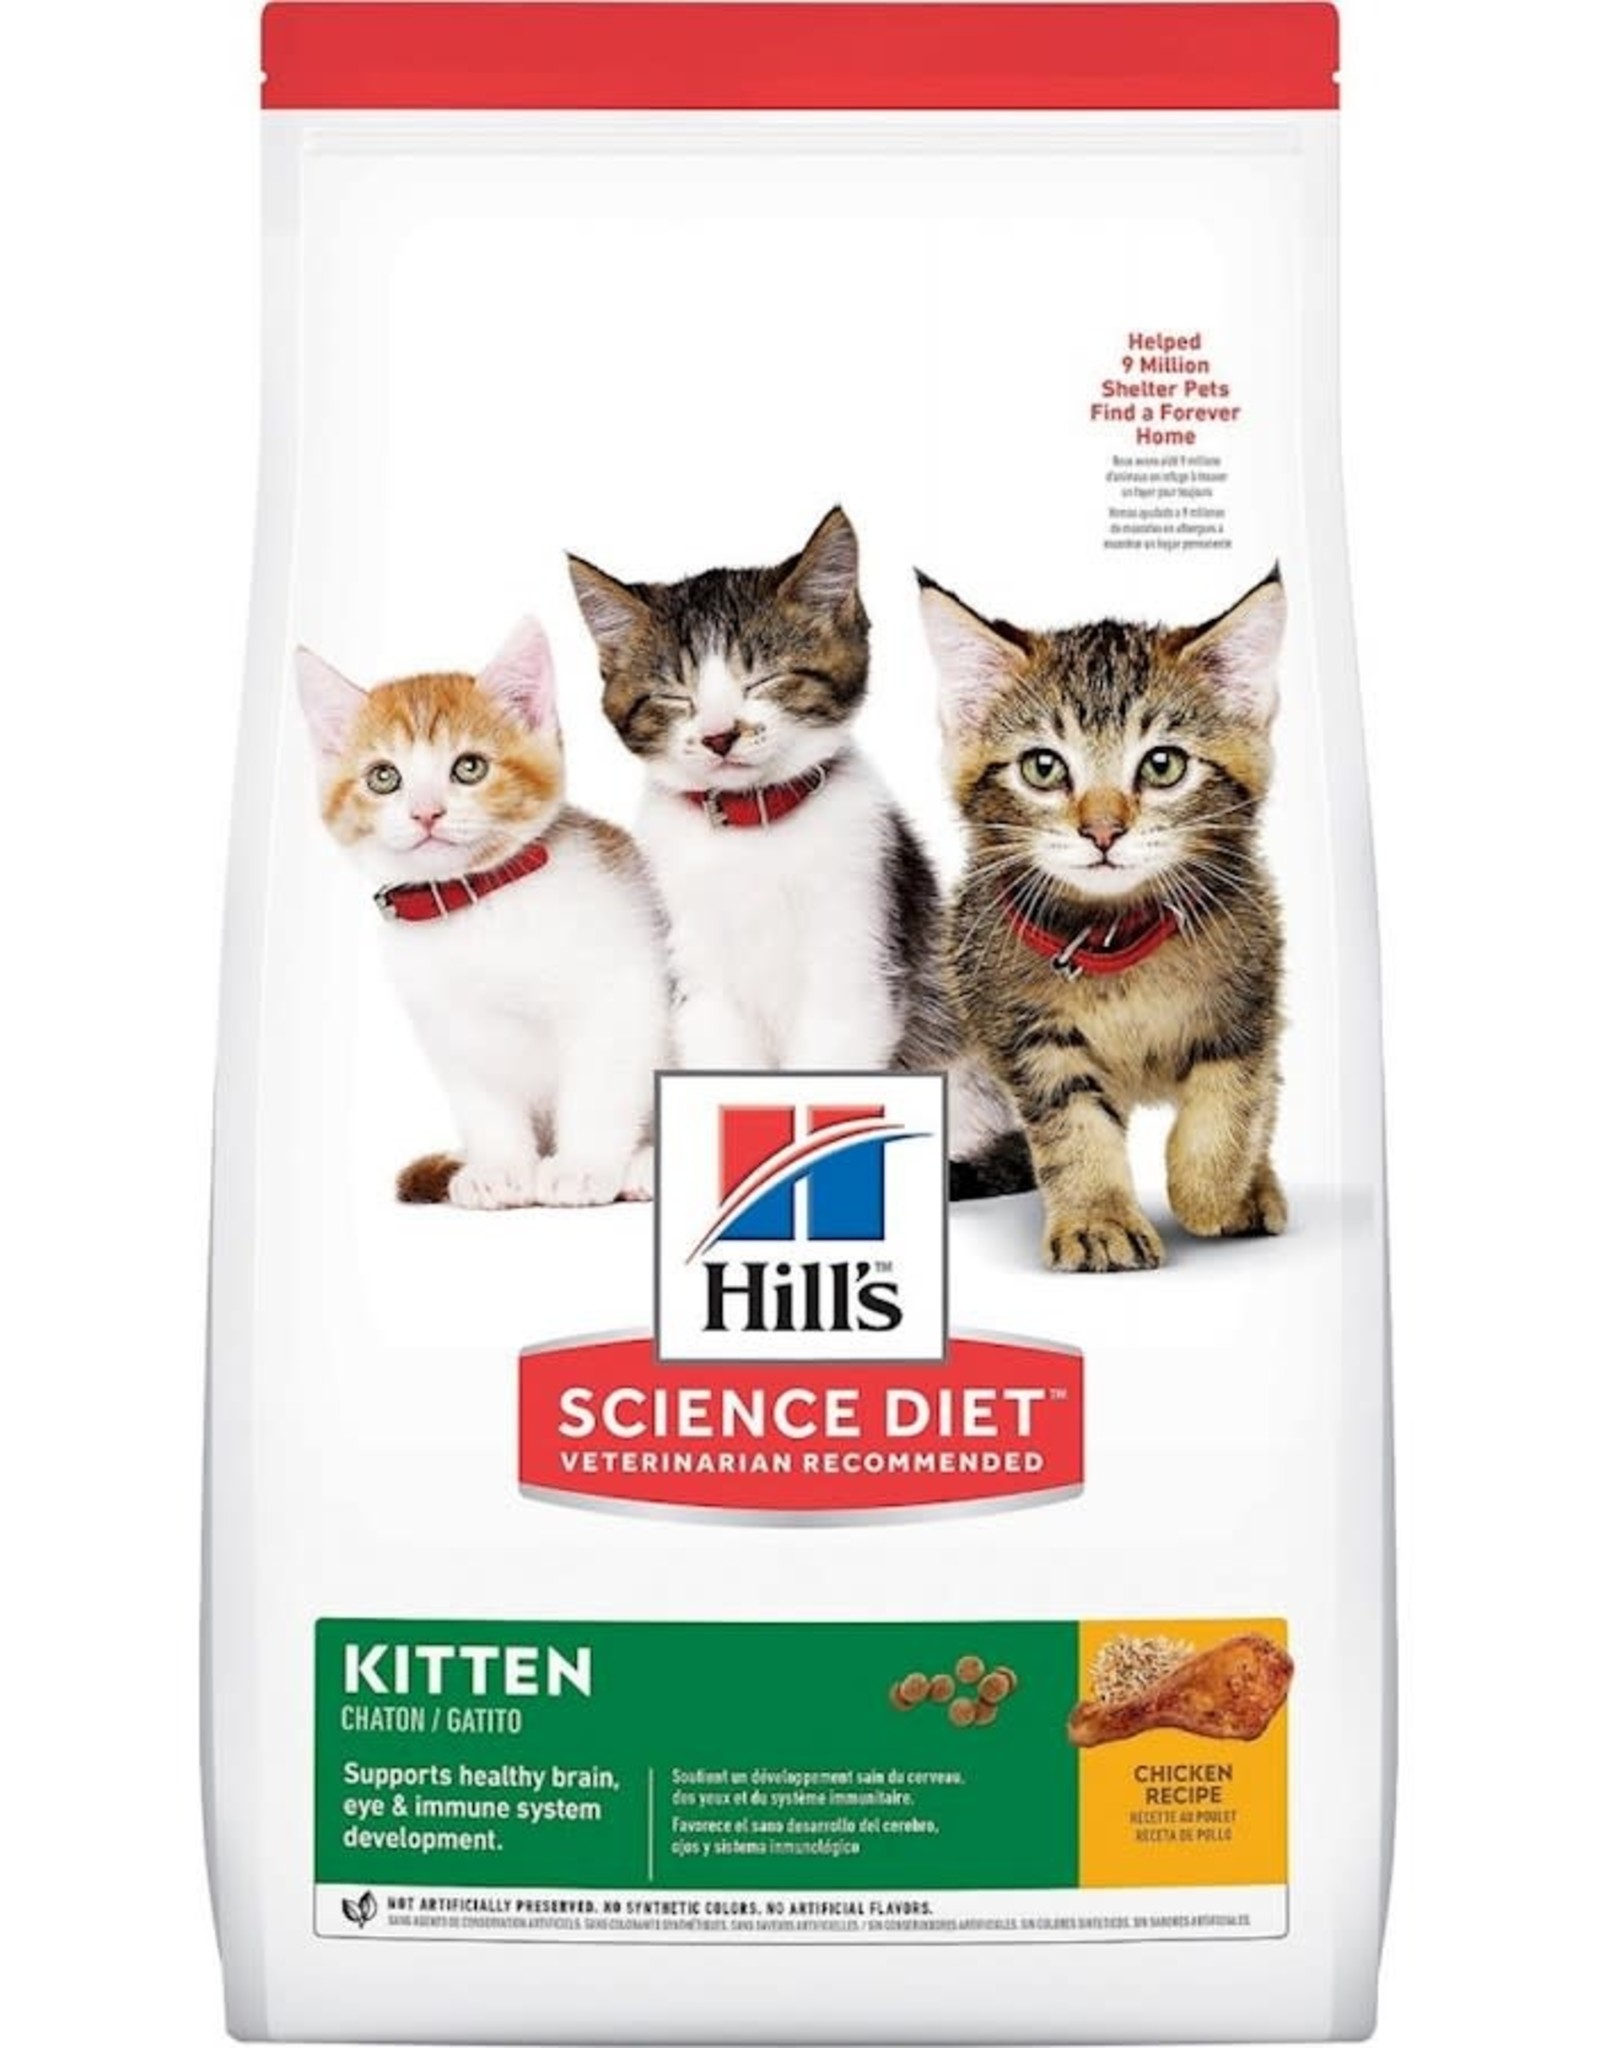 Hill's Science Pet Hill's Science Diet Kitten Chicken Recipe Dry Cat Food 3.5 lb (7123)